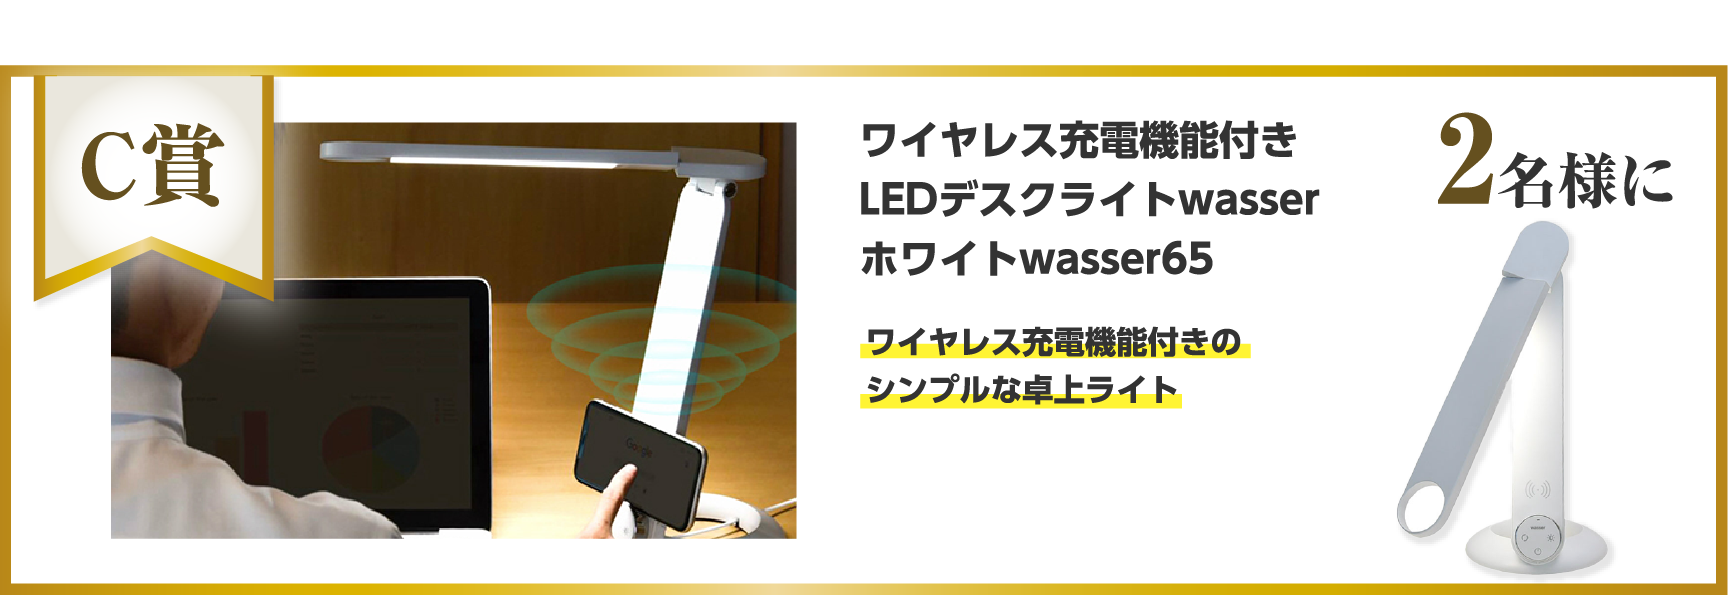 C賞 ワイヤレス充電機能付きLEDデスクライトwasserホワイトwasser65 ワイヤレス充電機能付きのシンプルな卓上ライト 2名様に